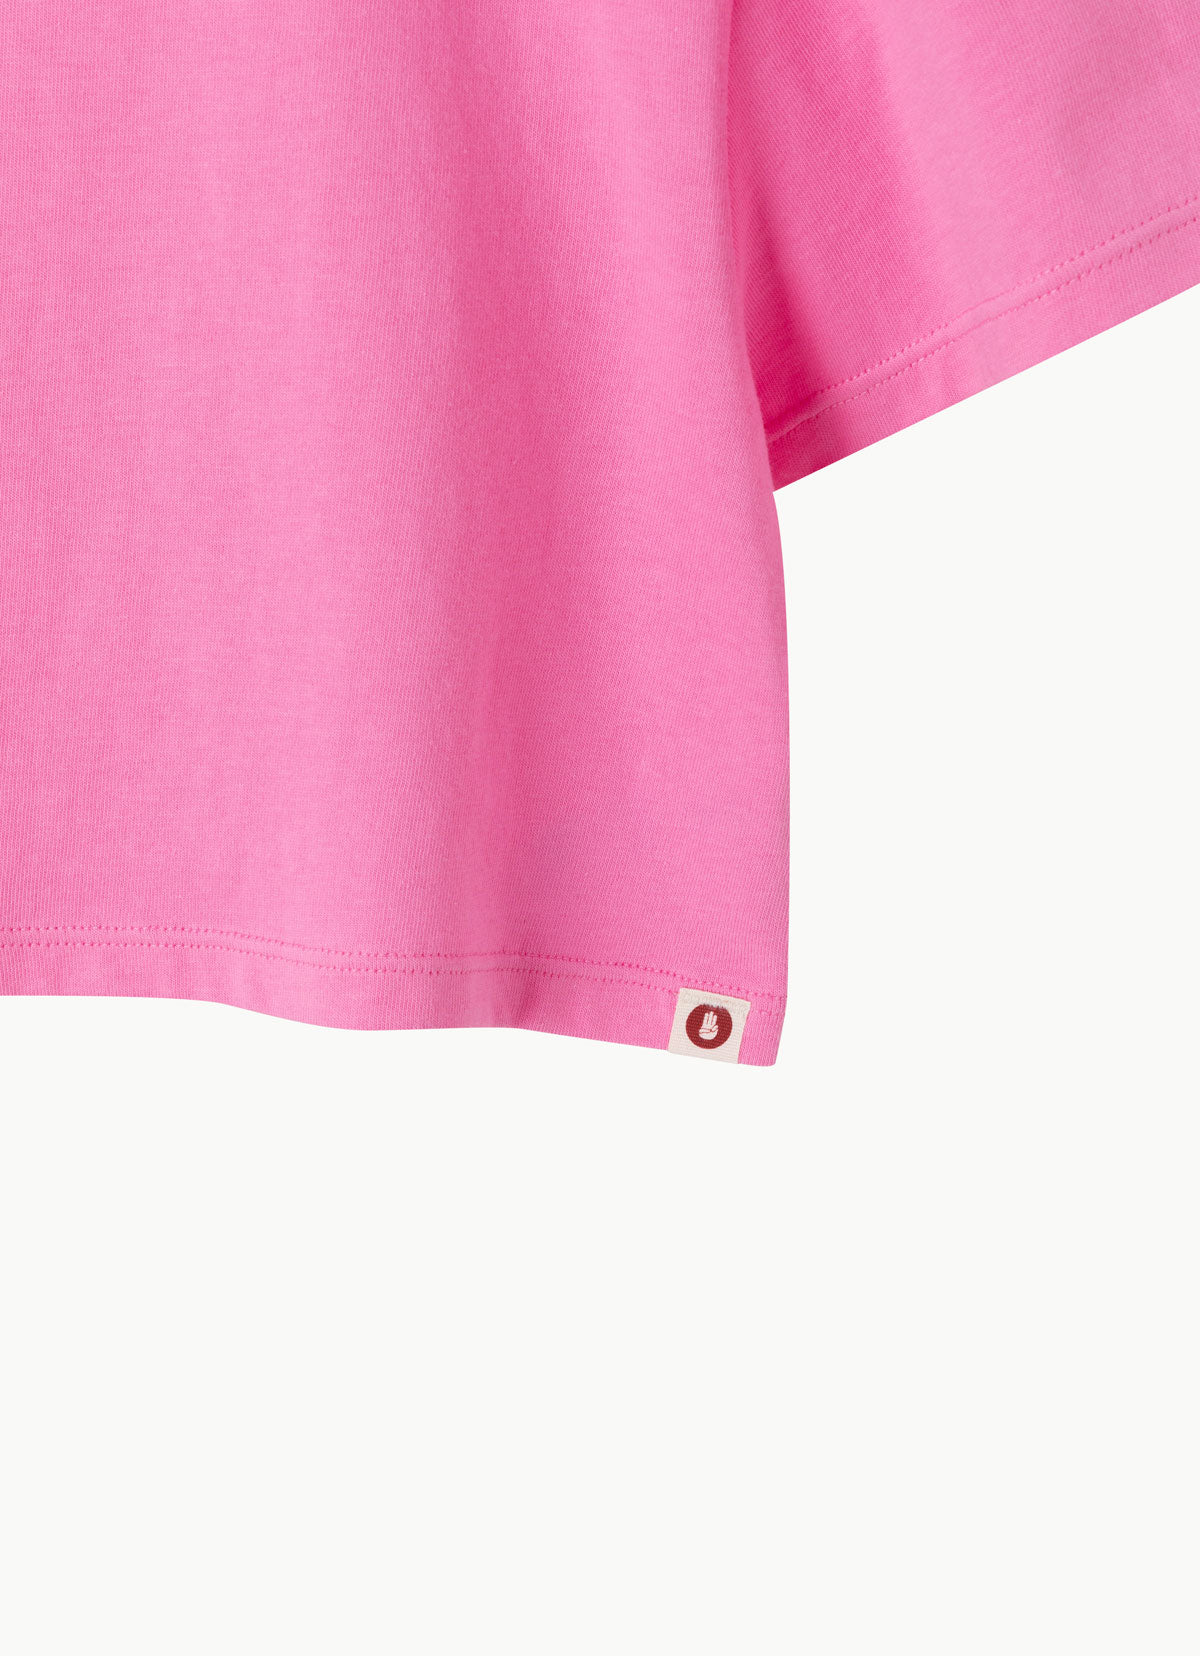 Kona short sleeve #2_Pink